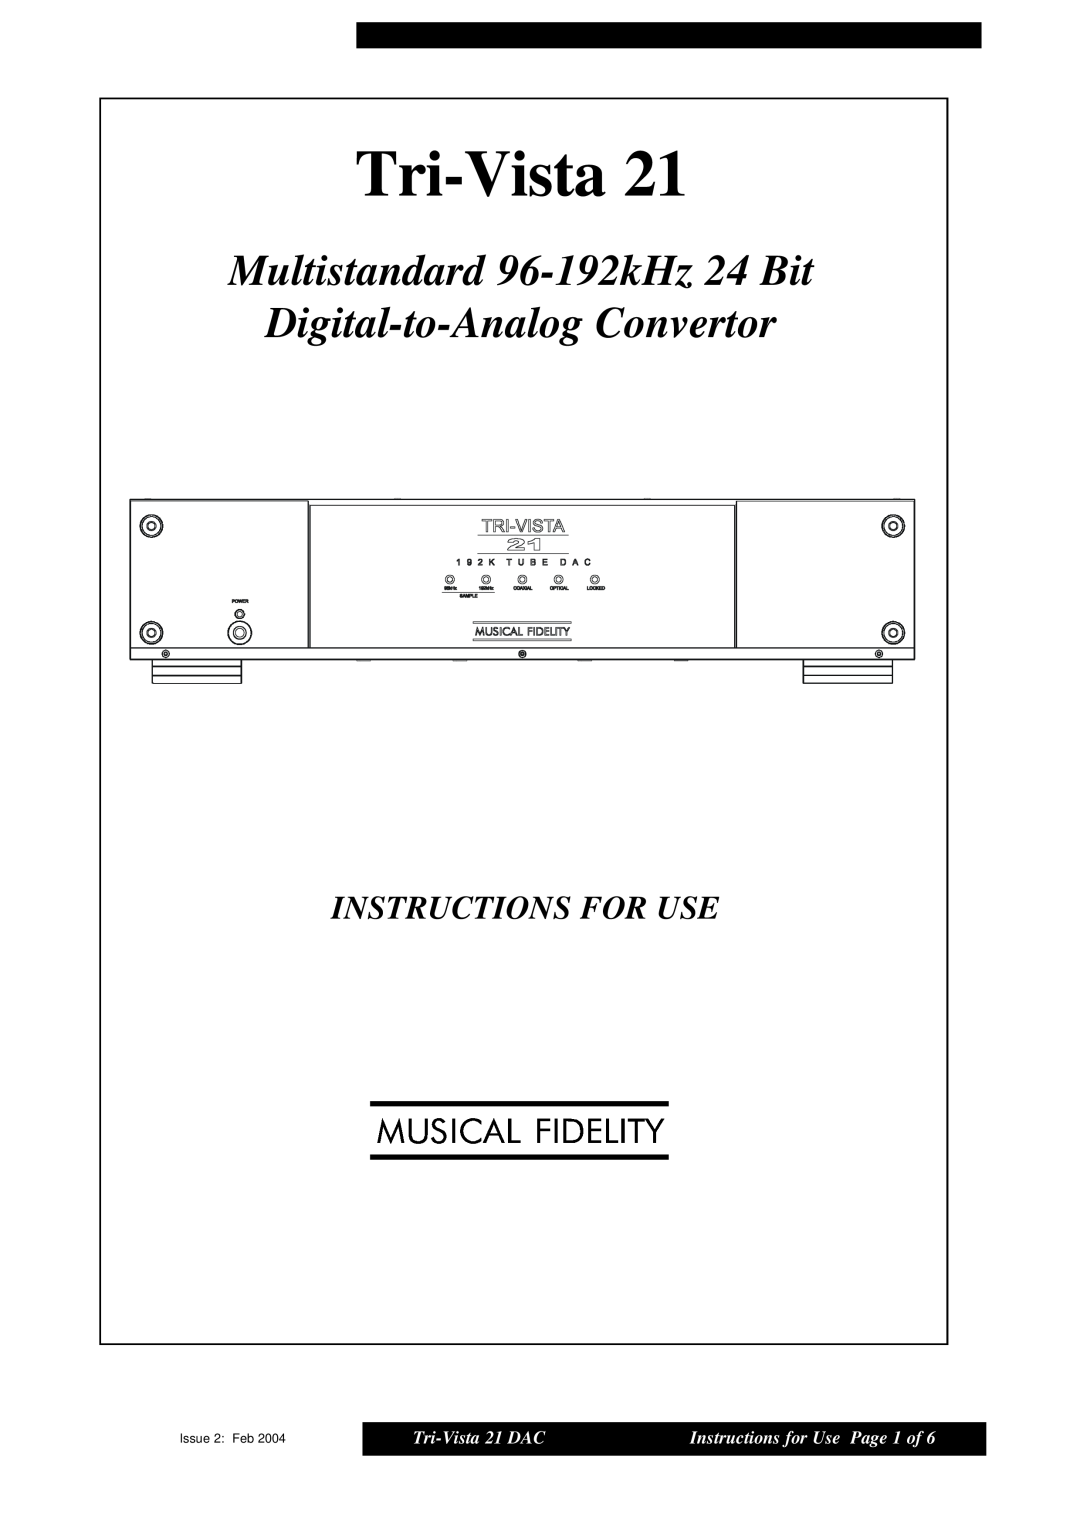 Musical Fidelity 21 manual Instructions For Use, Tri-Vista, Multistandard 96-192kHz 24 Bit, Digital-to-Analog Convertor 